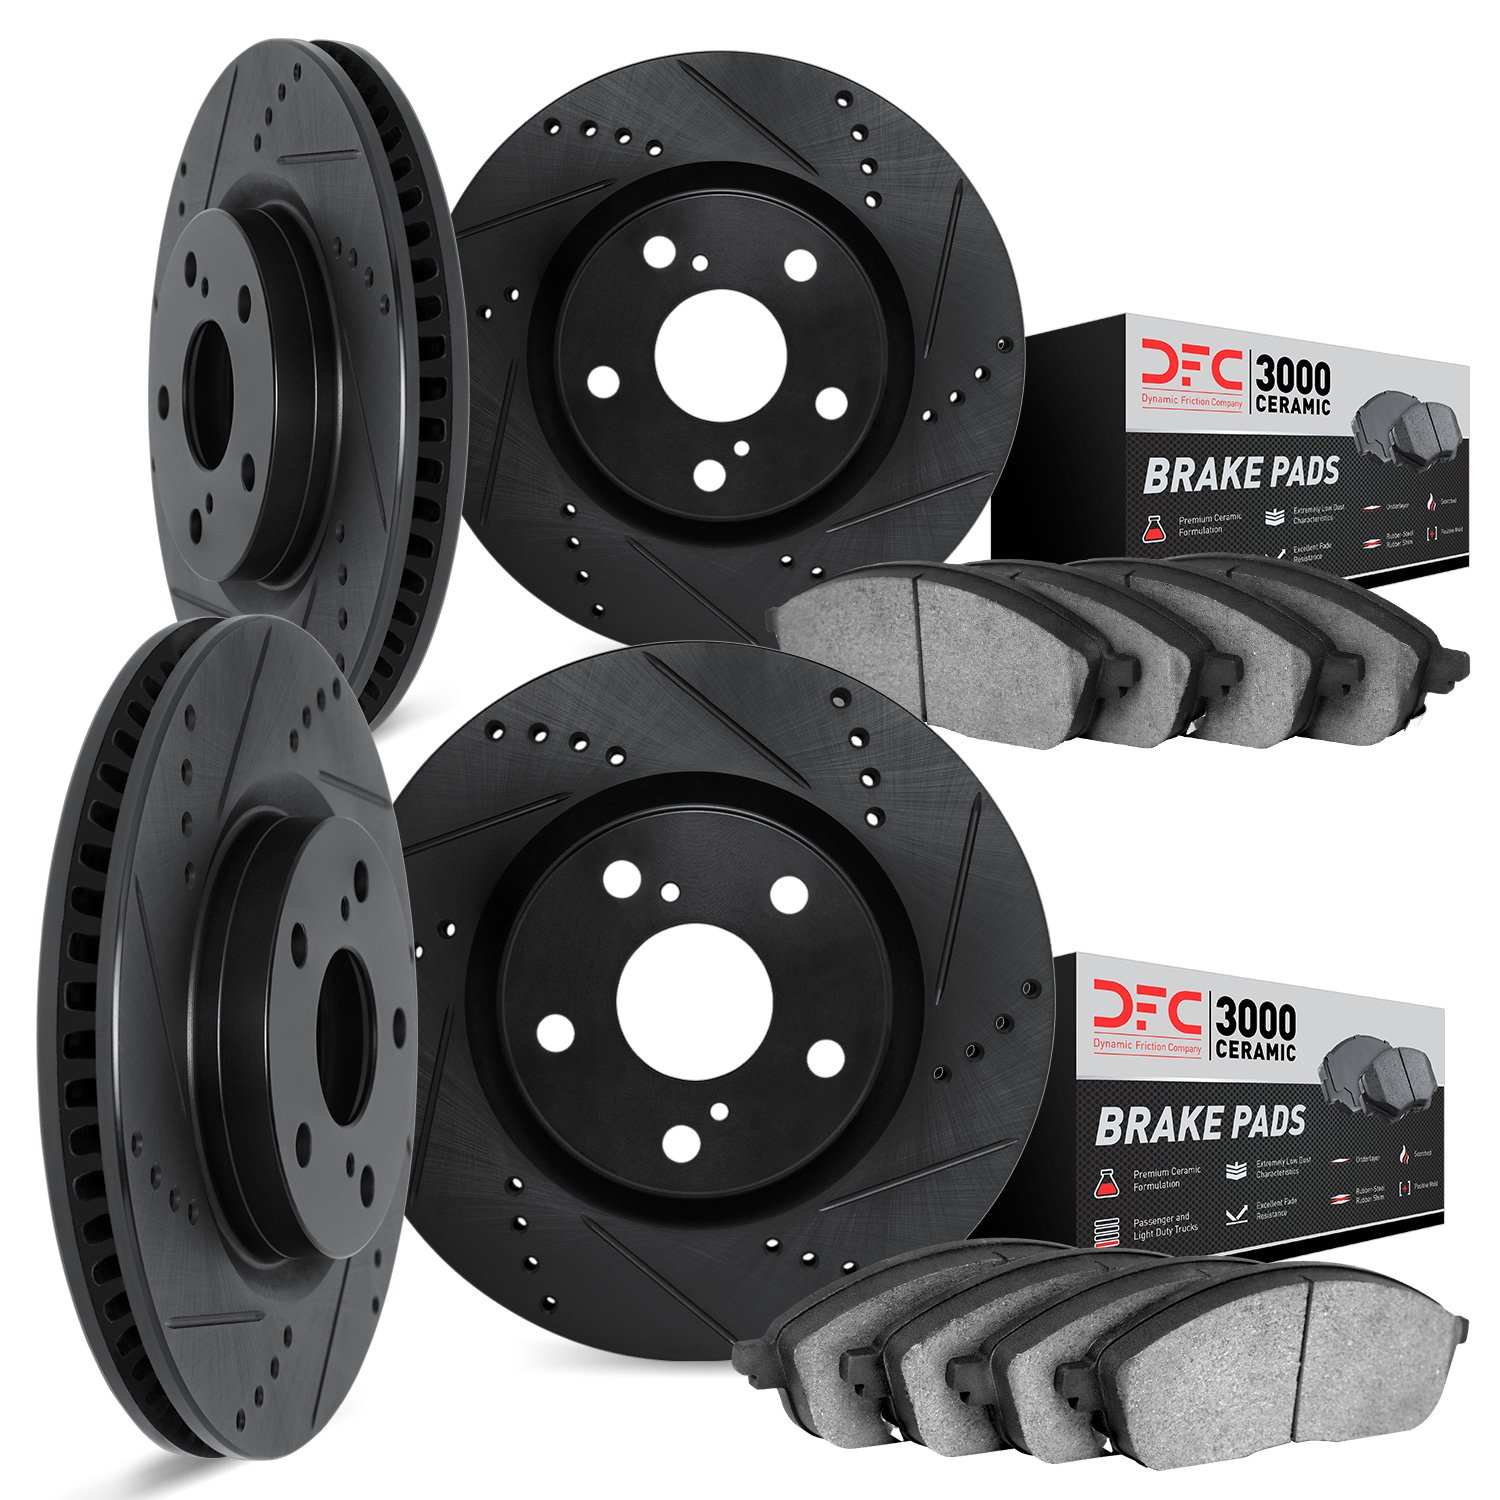 8304-54056 Drilled/Slotted Brake Rotors with 3000-Series Ceramic Brake Pads Kit [Black], 2010-2011 Ford/Lincoln/Mercury/Mazda, P